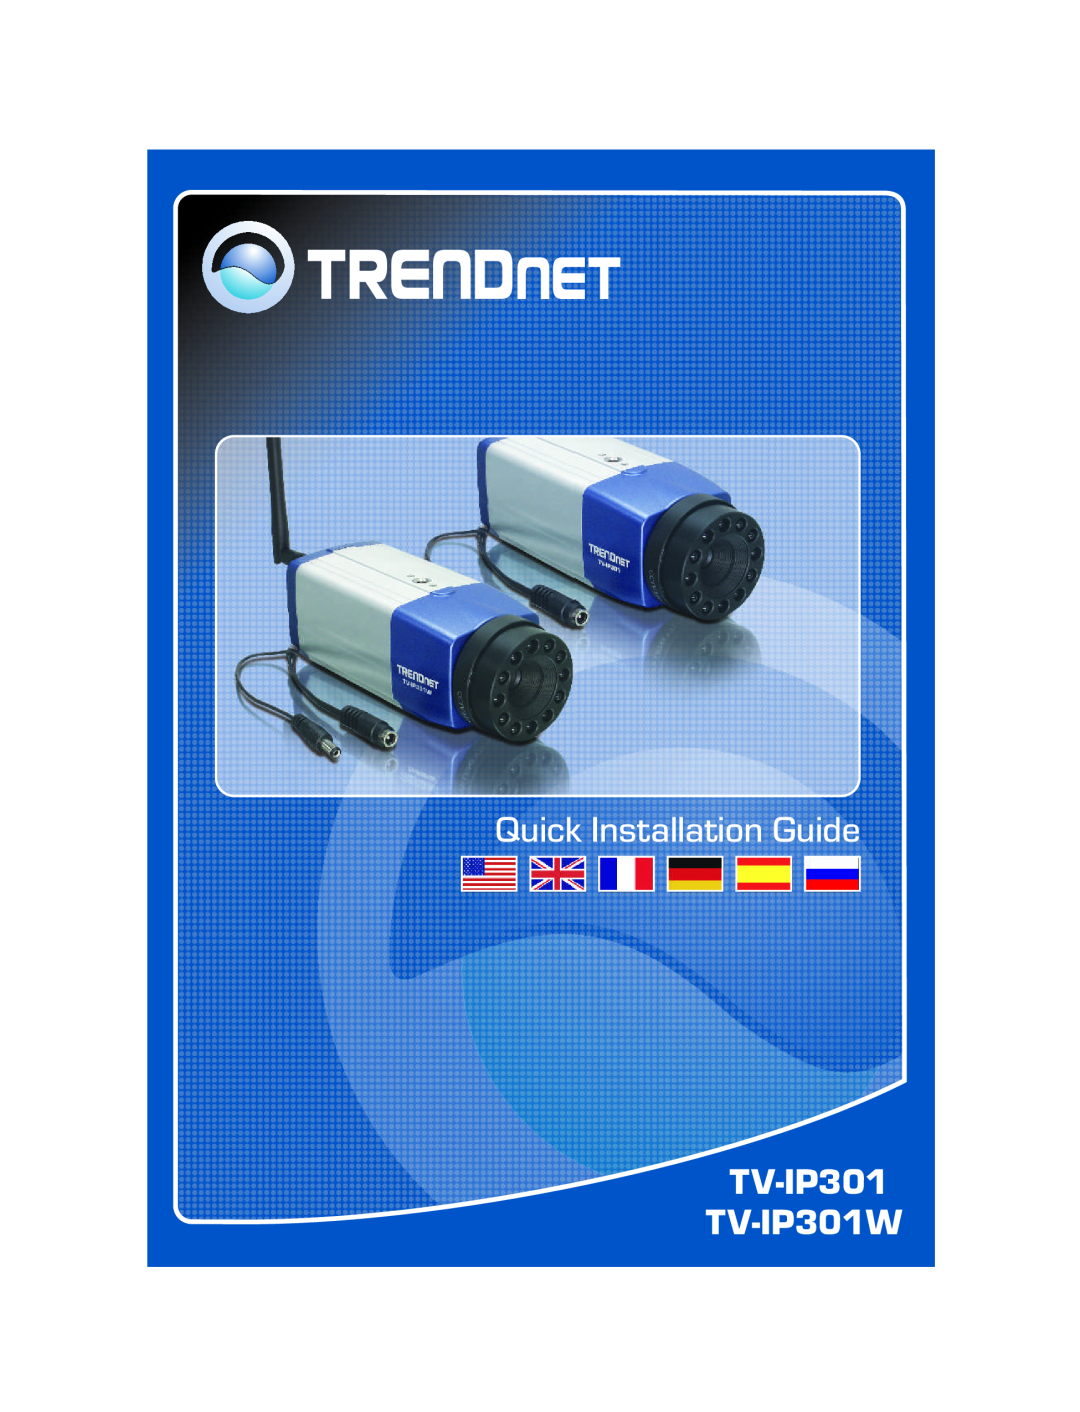 TRENDnet TEW-637AP, TRENDNET manual 3.01, Quick Installation Guide 